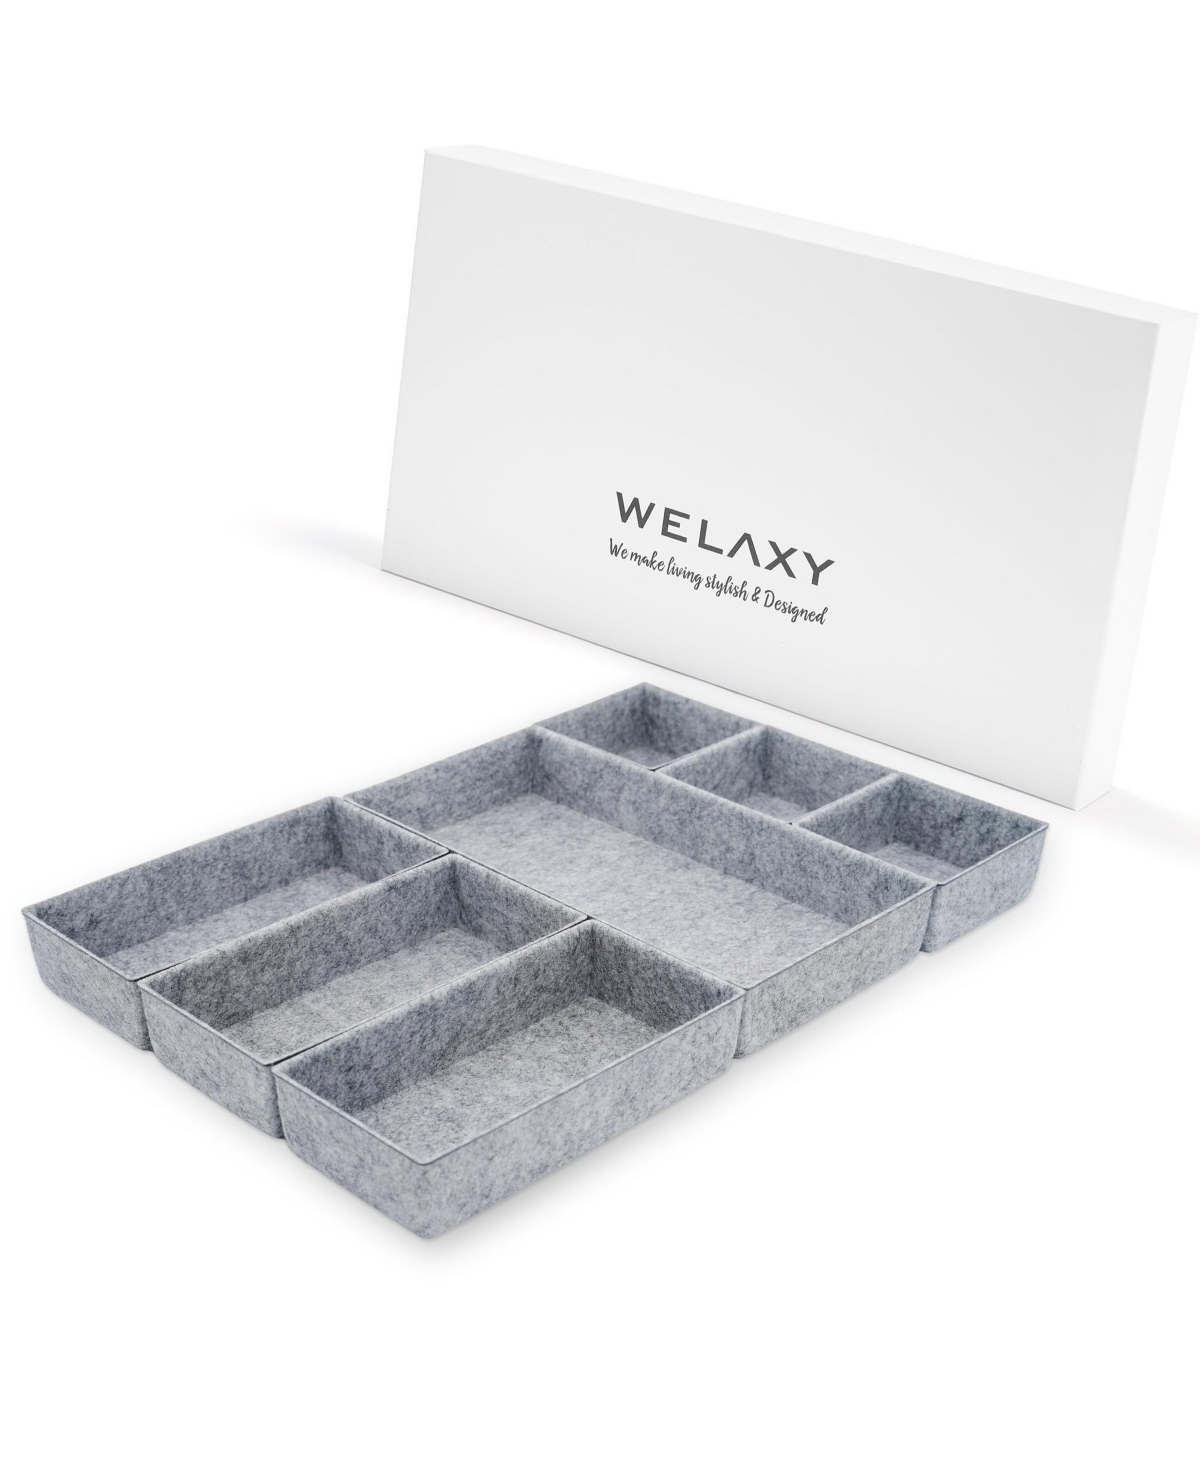 Deluxe 7 Piece Rectangular Organizer Bins Gift Boxed Set - Gray